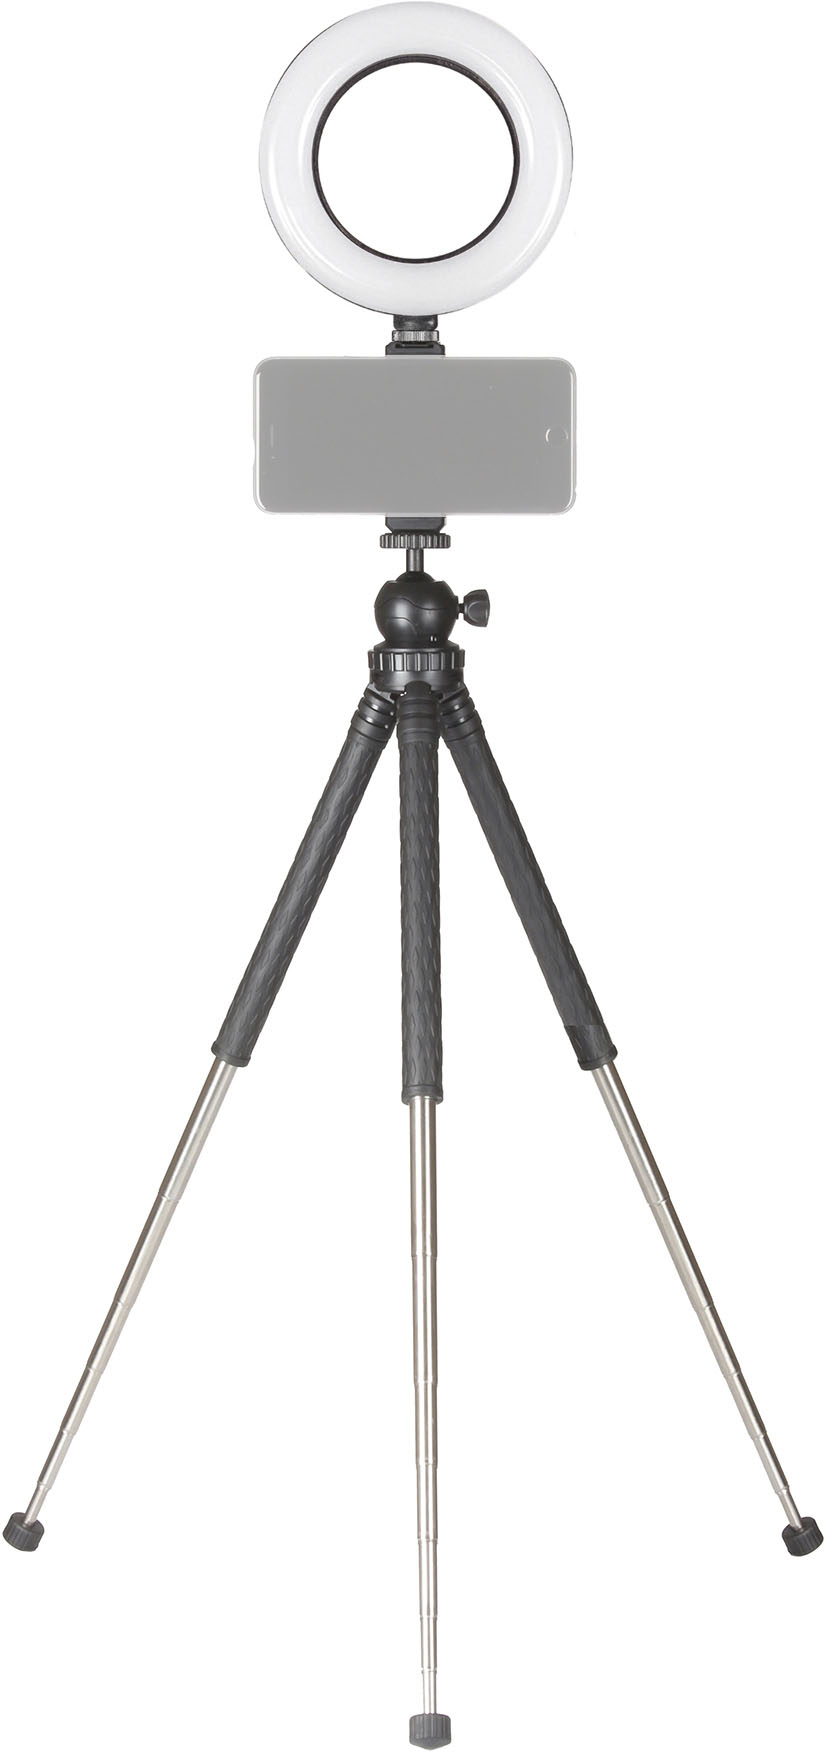 Angle View: Sunpak - Portable Vlogging Kit for Smartphones - Black